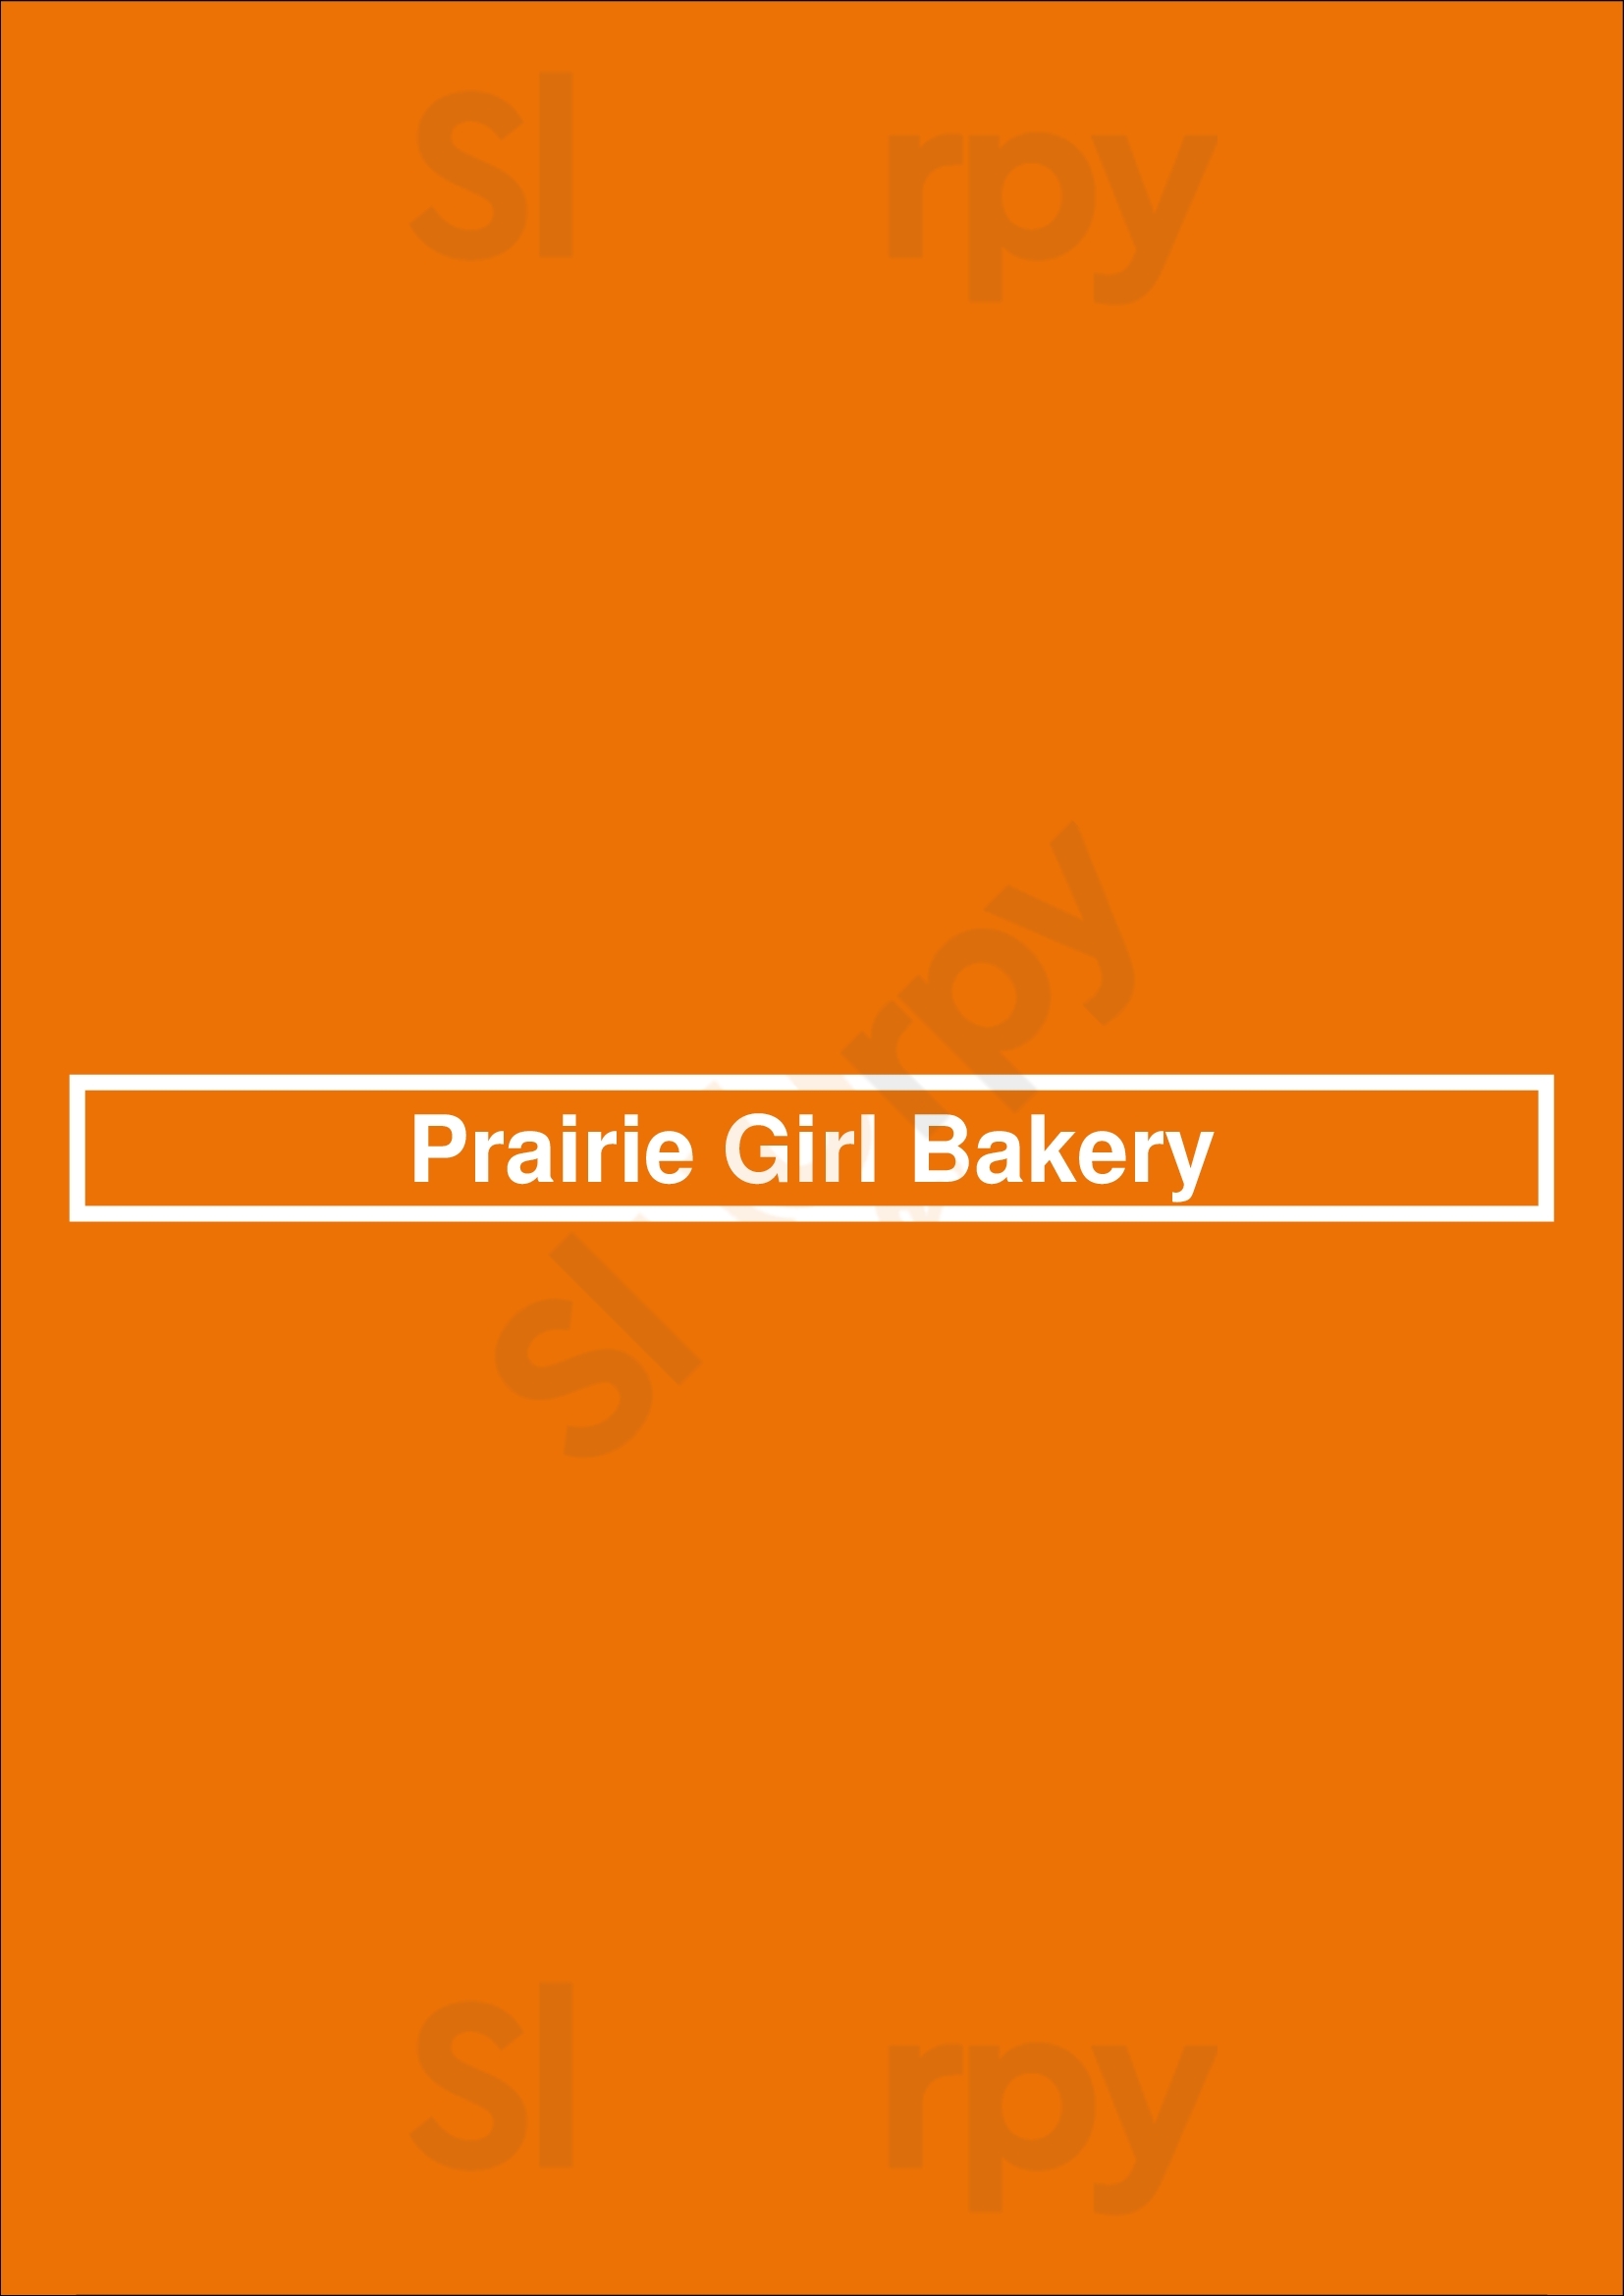 Prairie Girl Bakery Toronto Menu - 1